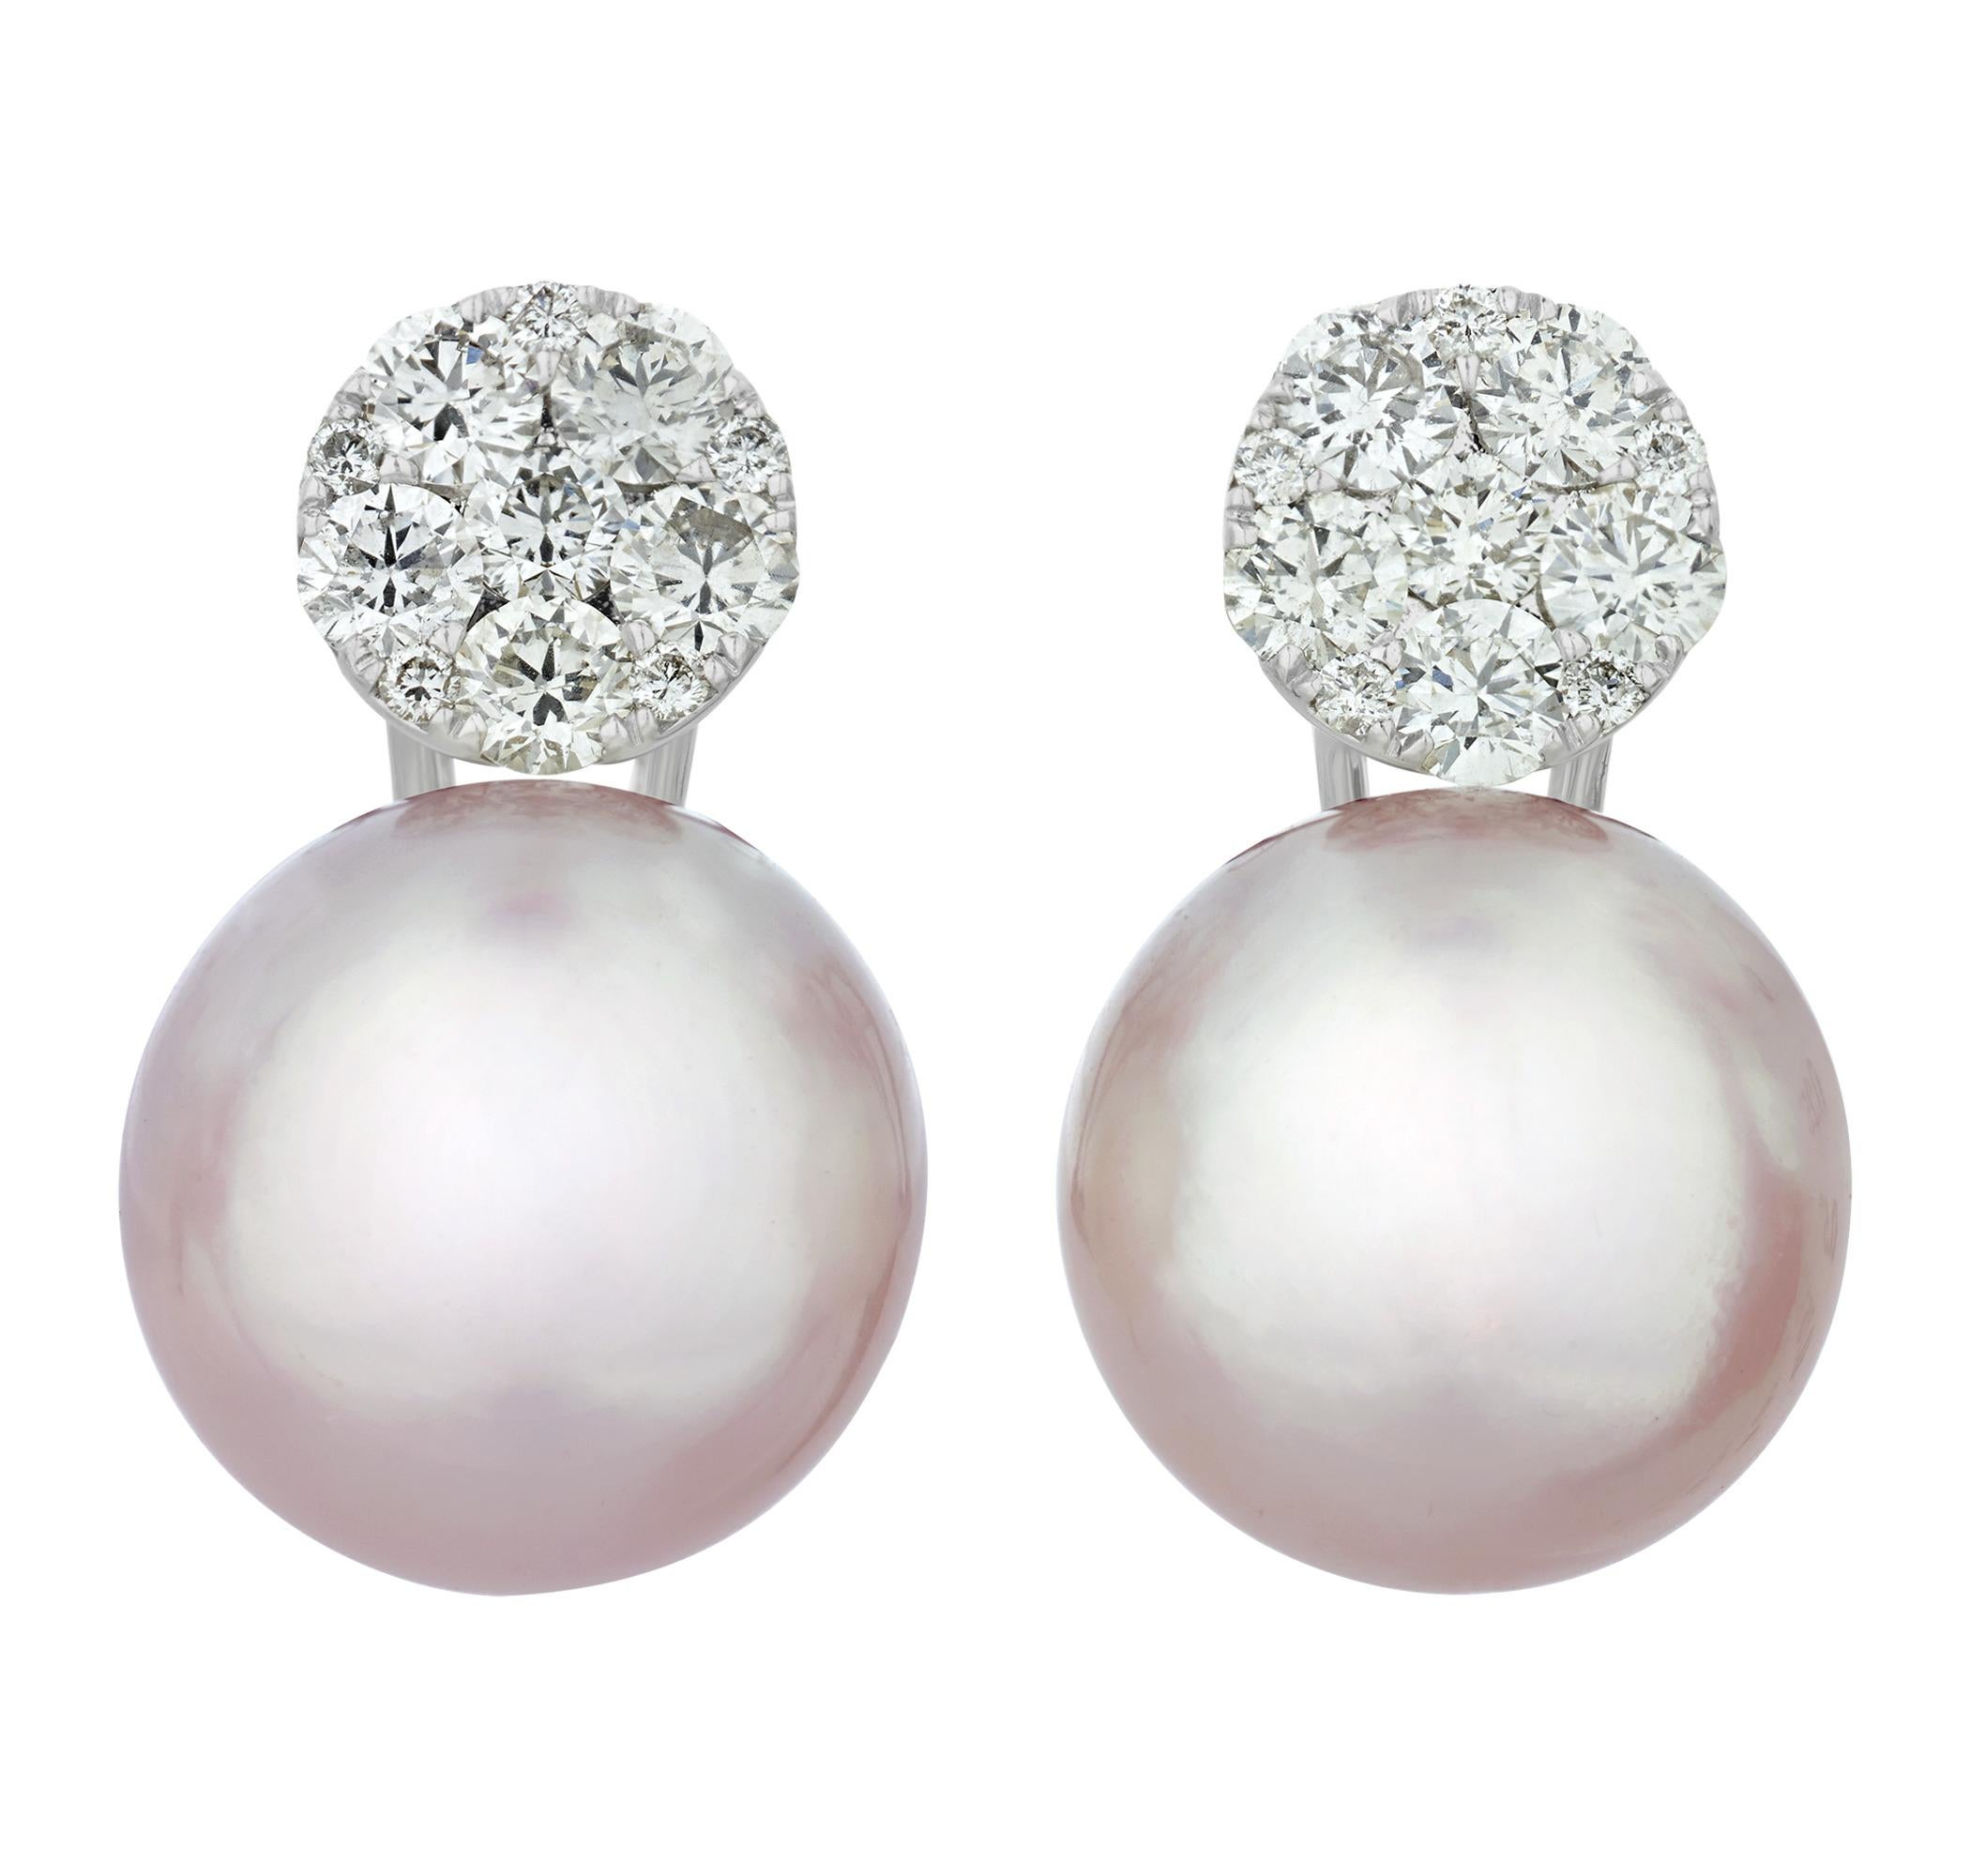 Uncut South Sea Pearl And Diamond Earrings, 1.80 Carats